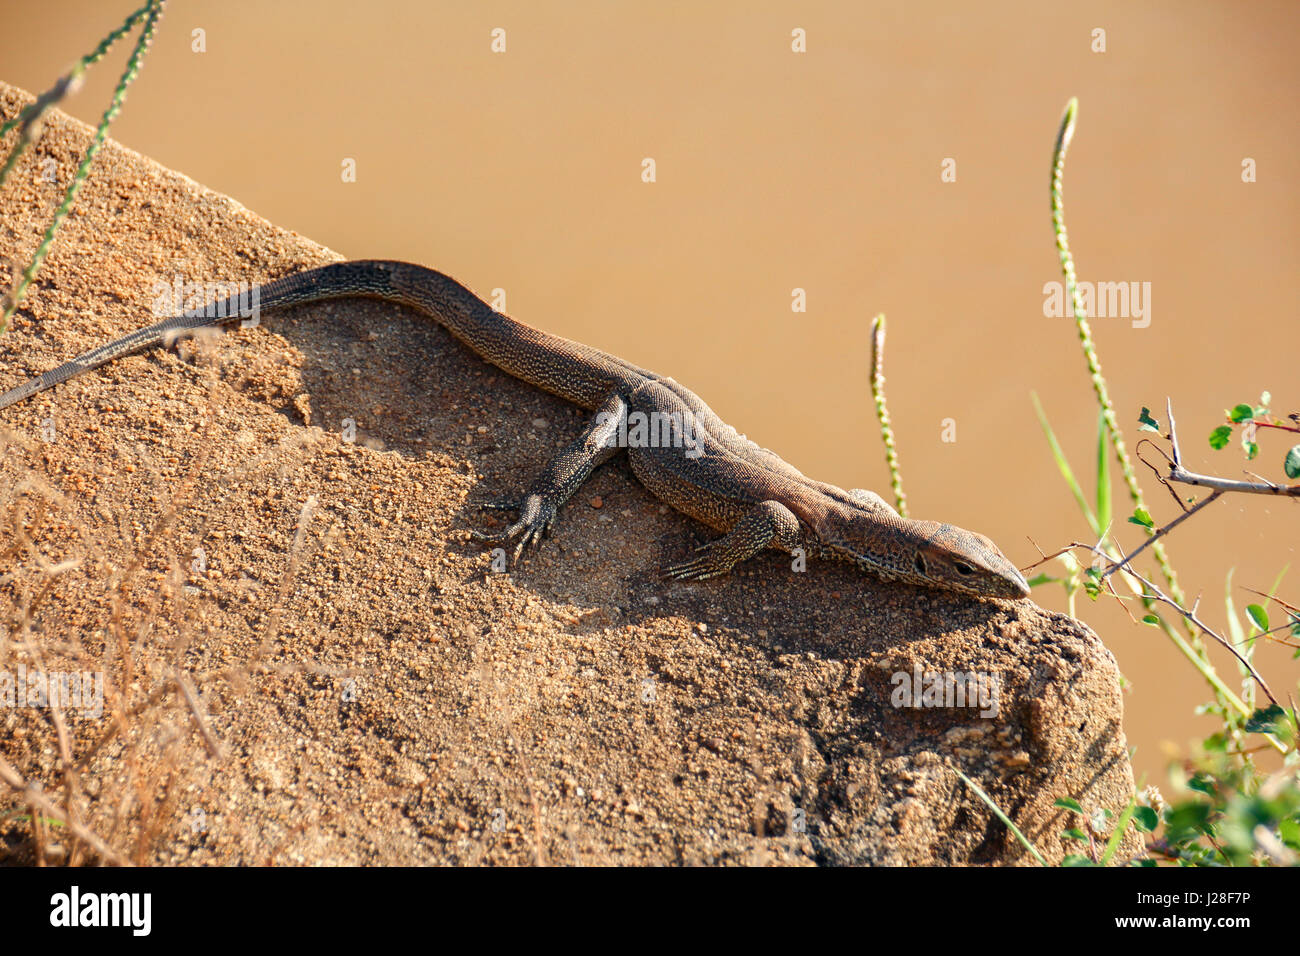 Sri Lanka, provincia sud, Tissamaharama, Yala National Park, Lizard Foto Stock